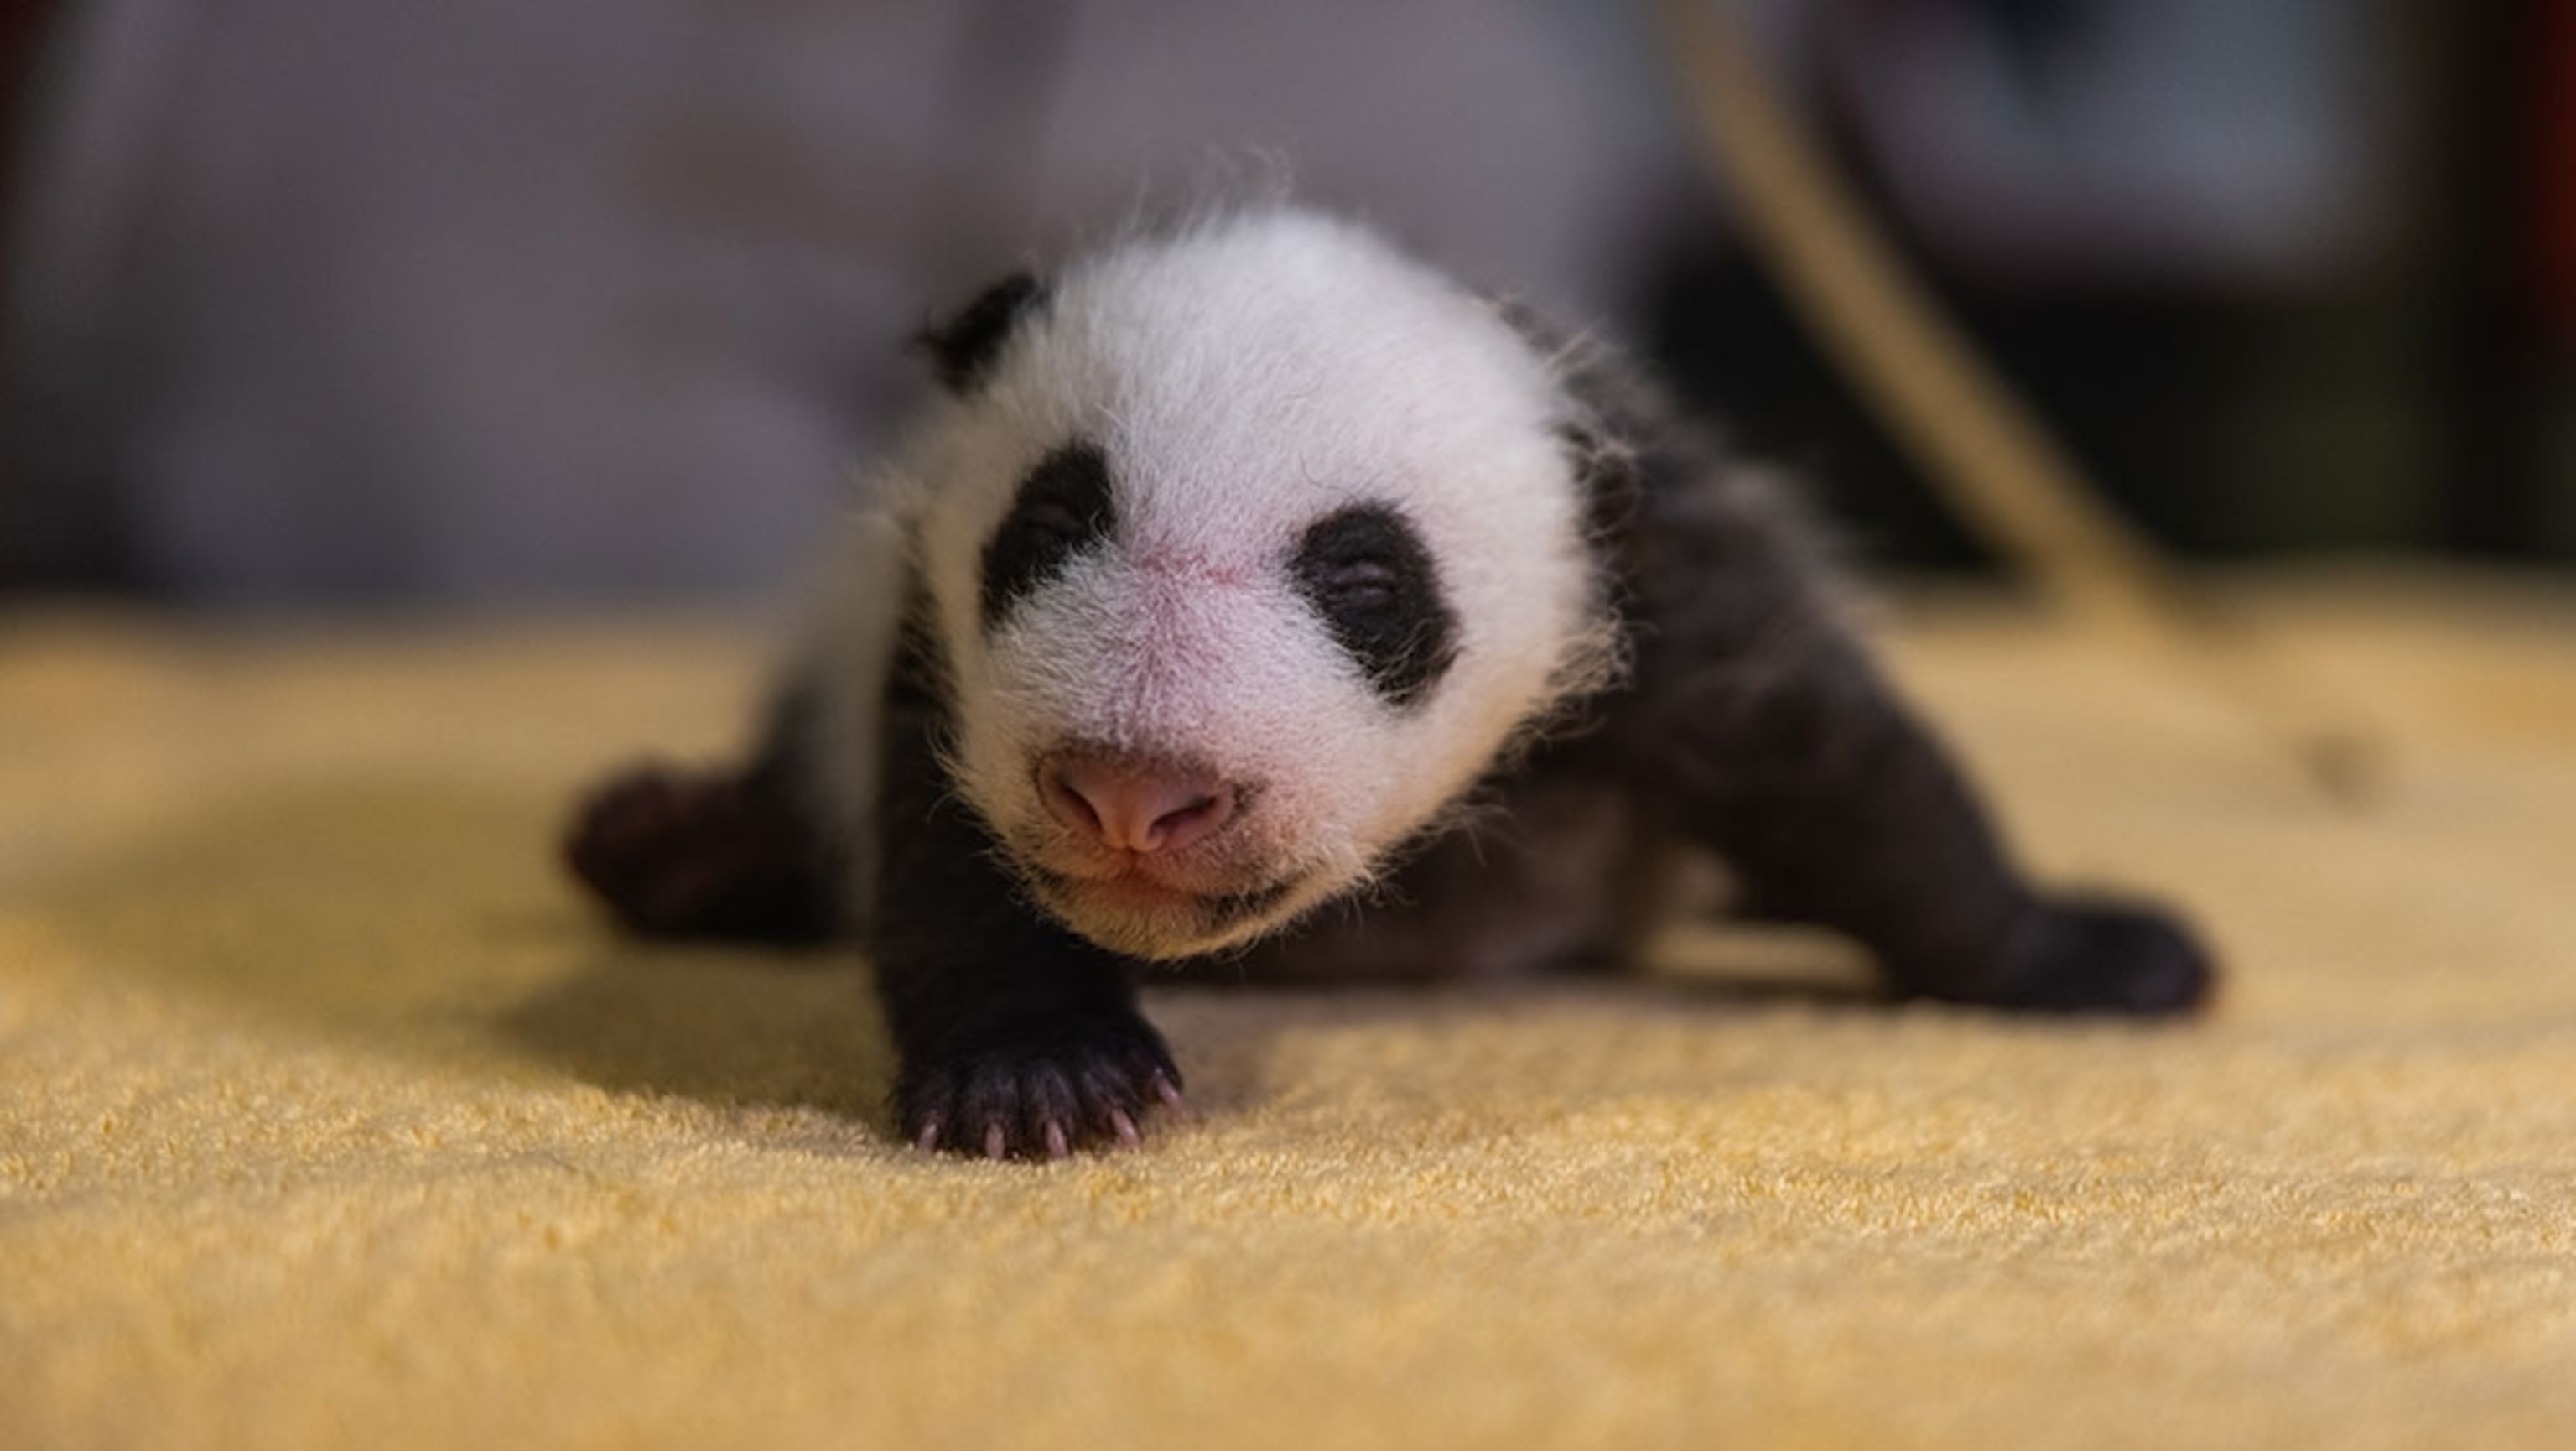 How many ounces do baby pandas weigh?